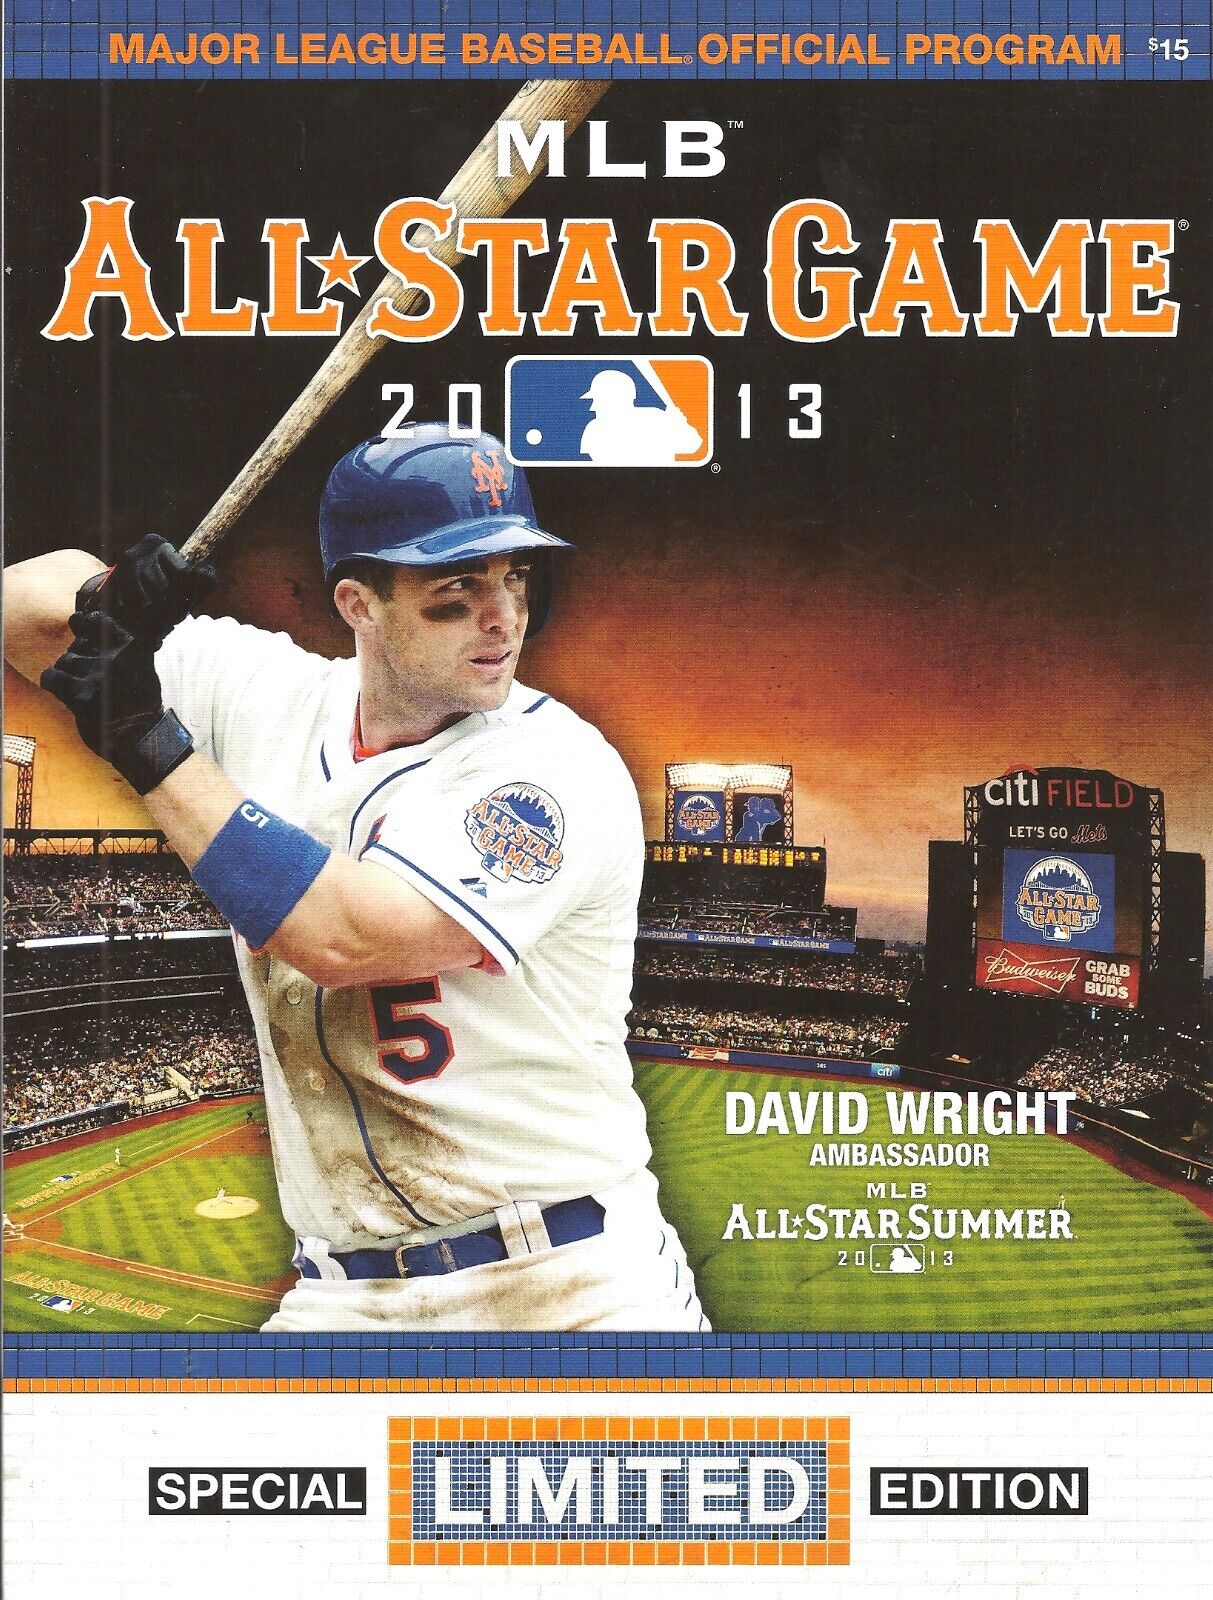 2013 Limited Edition MLB All-Star Game Program